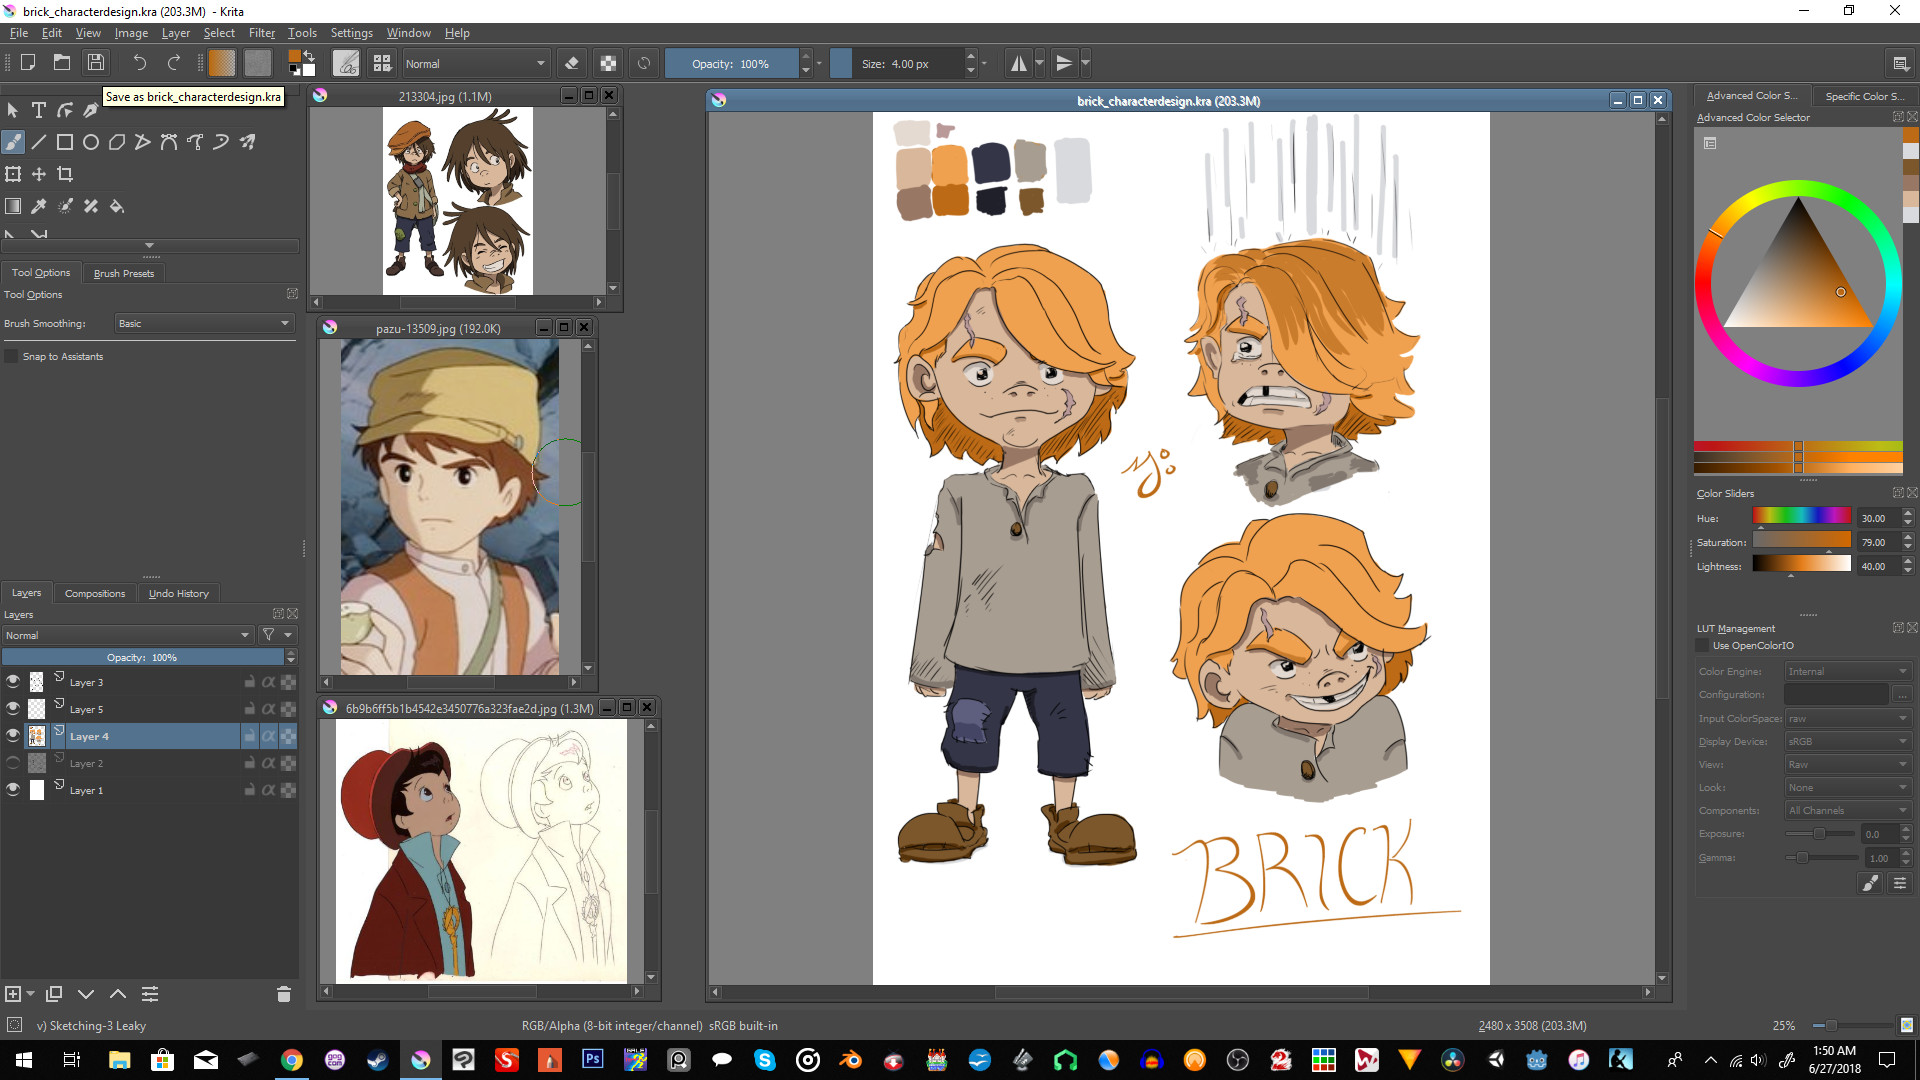 ArtStation - Brick Character Design Rough draft